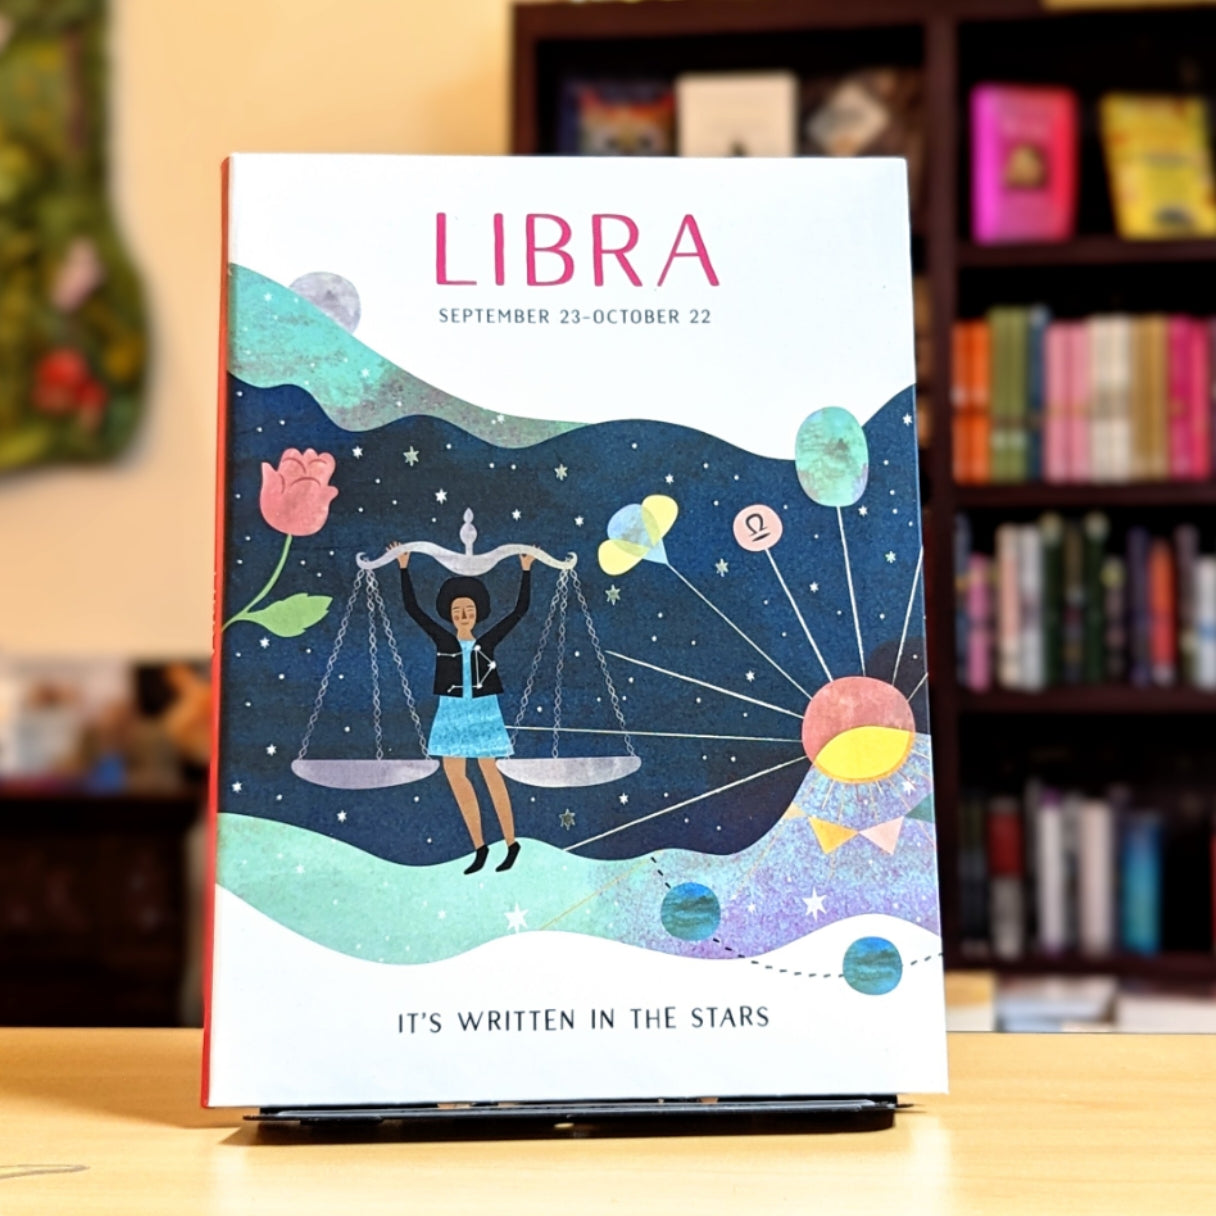 Libra (Volume 7) (It's Written in the Stars)